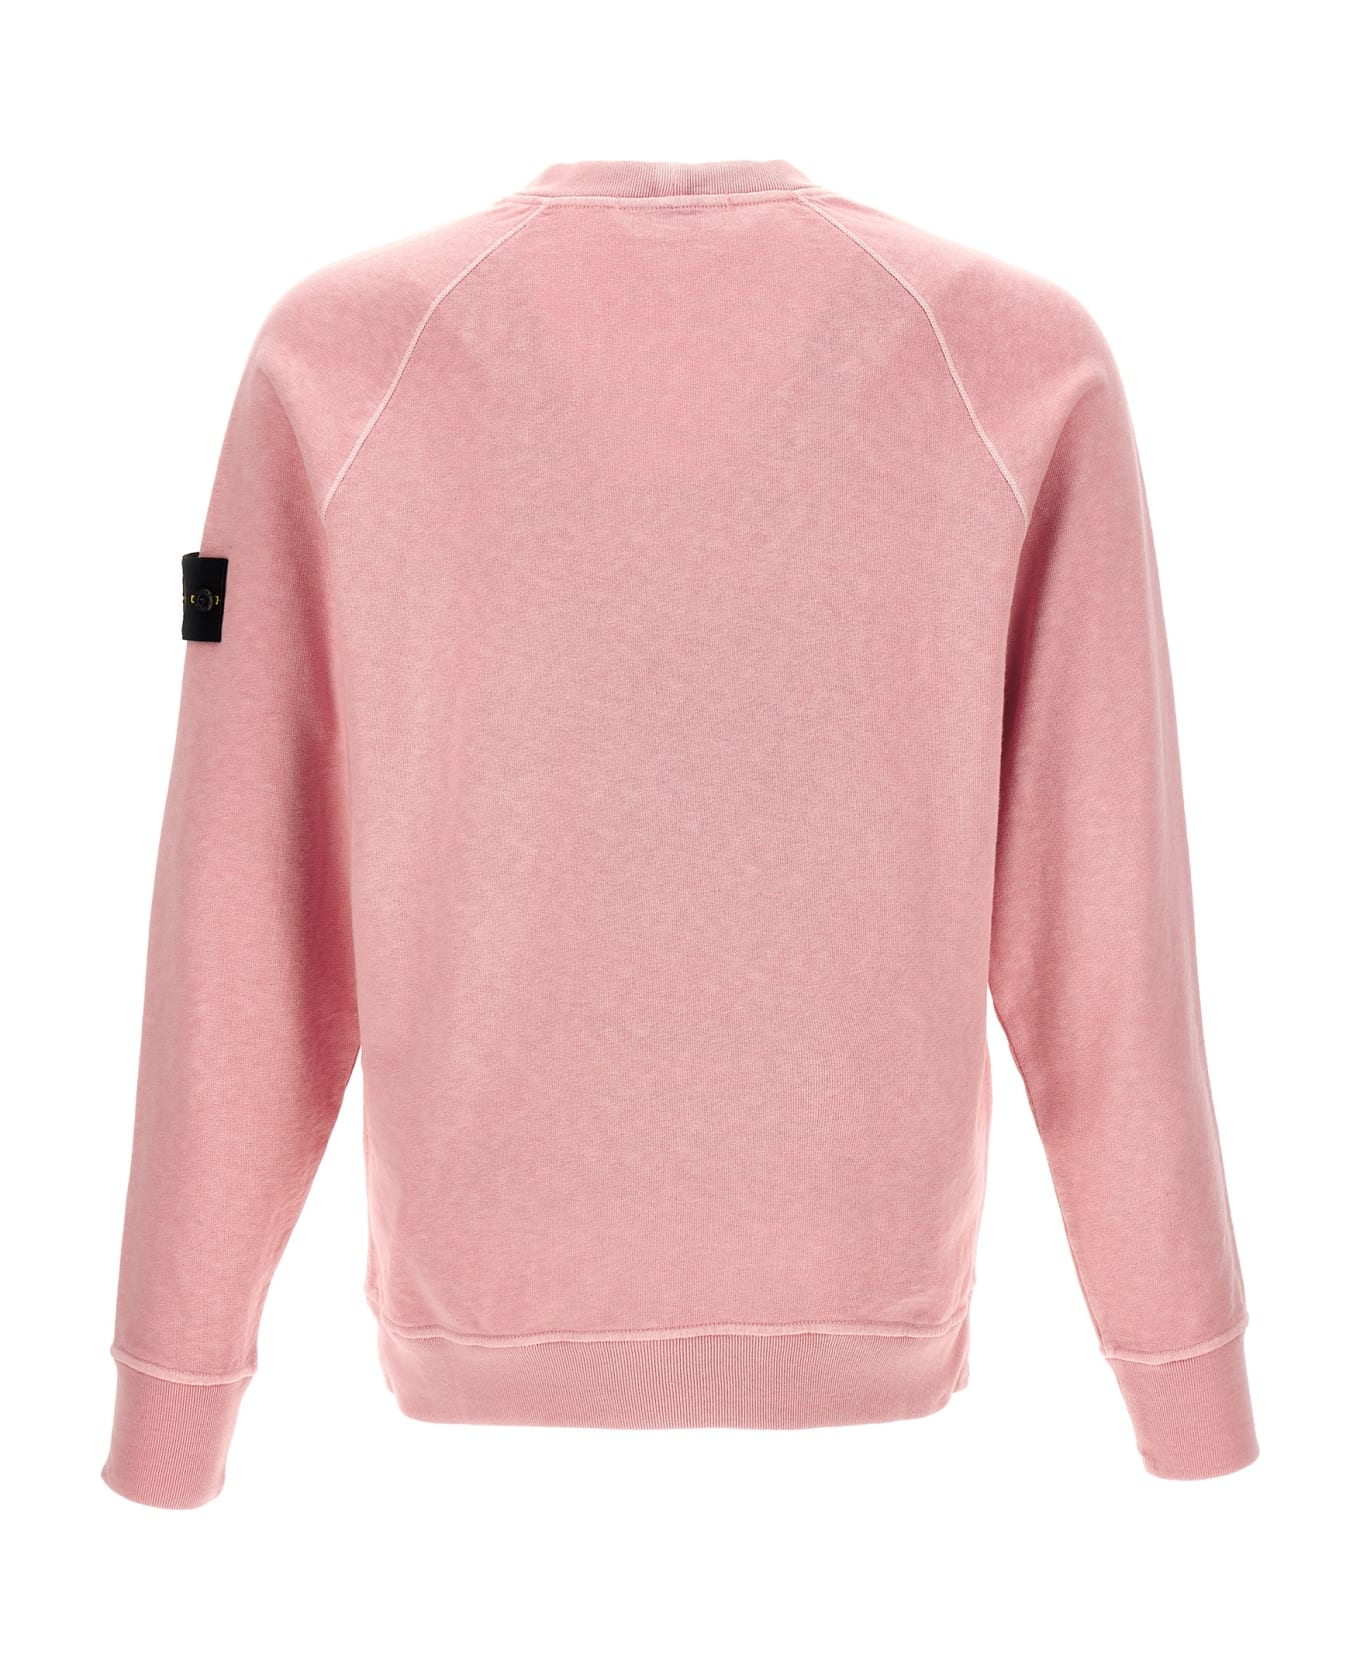 Stone Island Logo Sweatshirt - Pink フリース